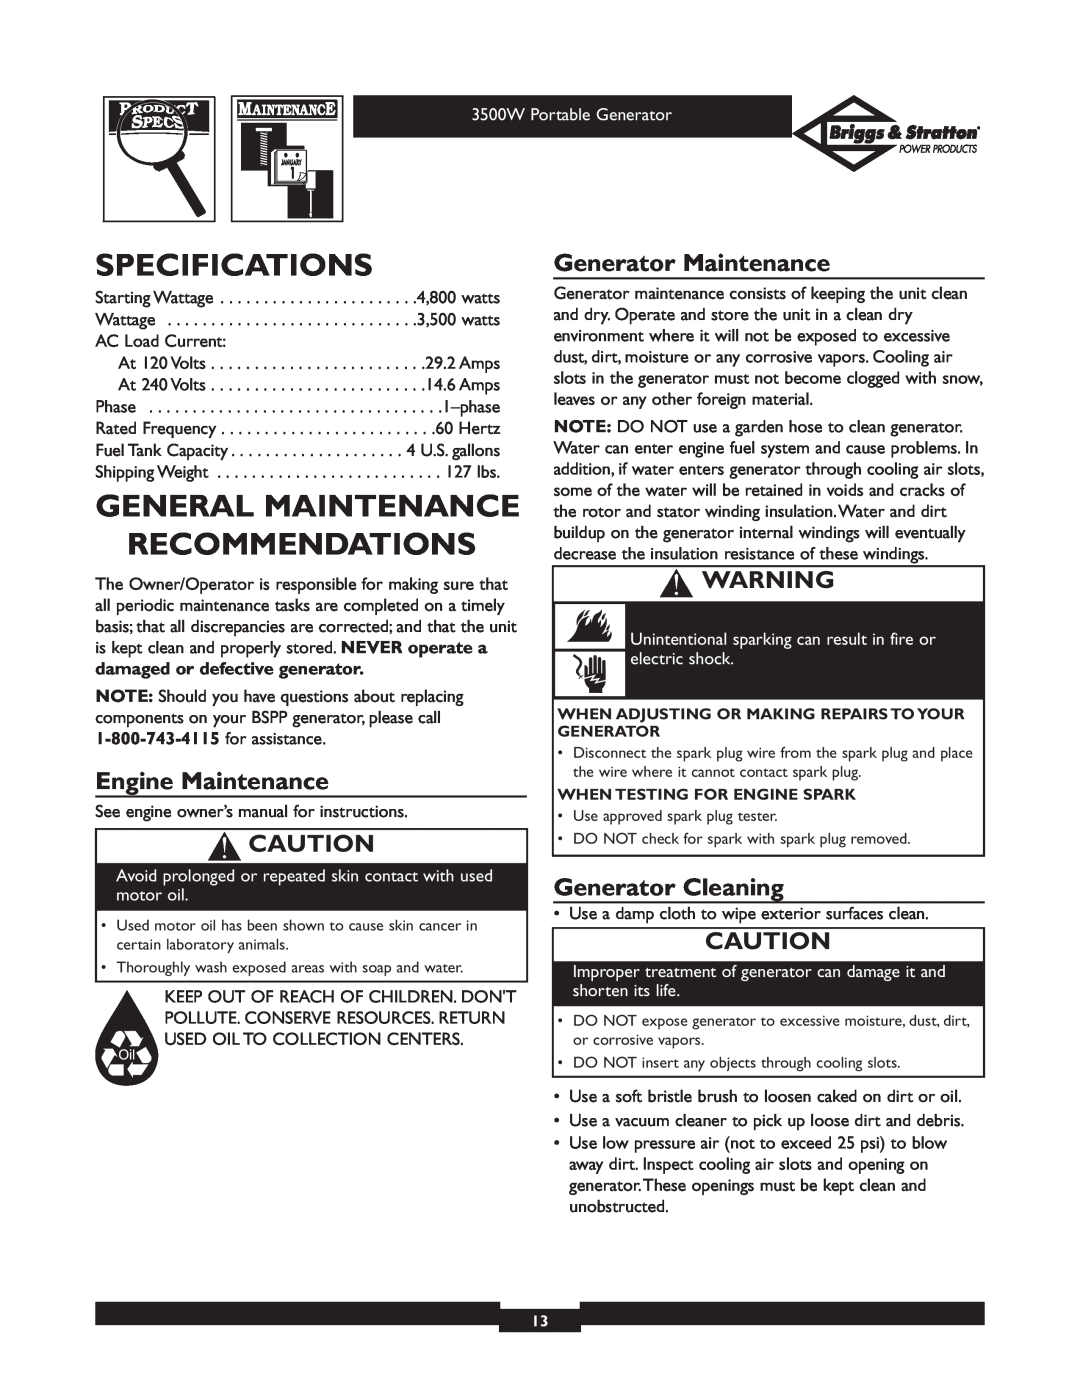 Briggs & Stratton 30208 Specifications, General Maintenance Recommendations, Engine Maintenance, Generator Maintenance 